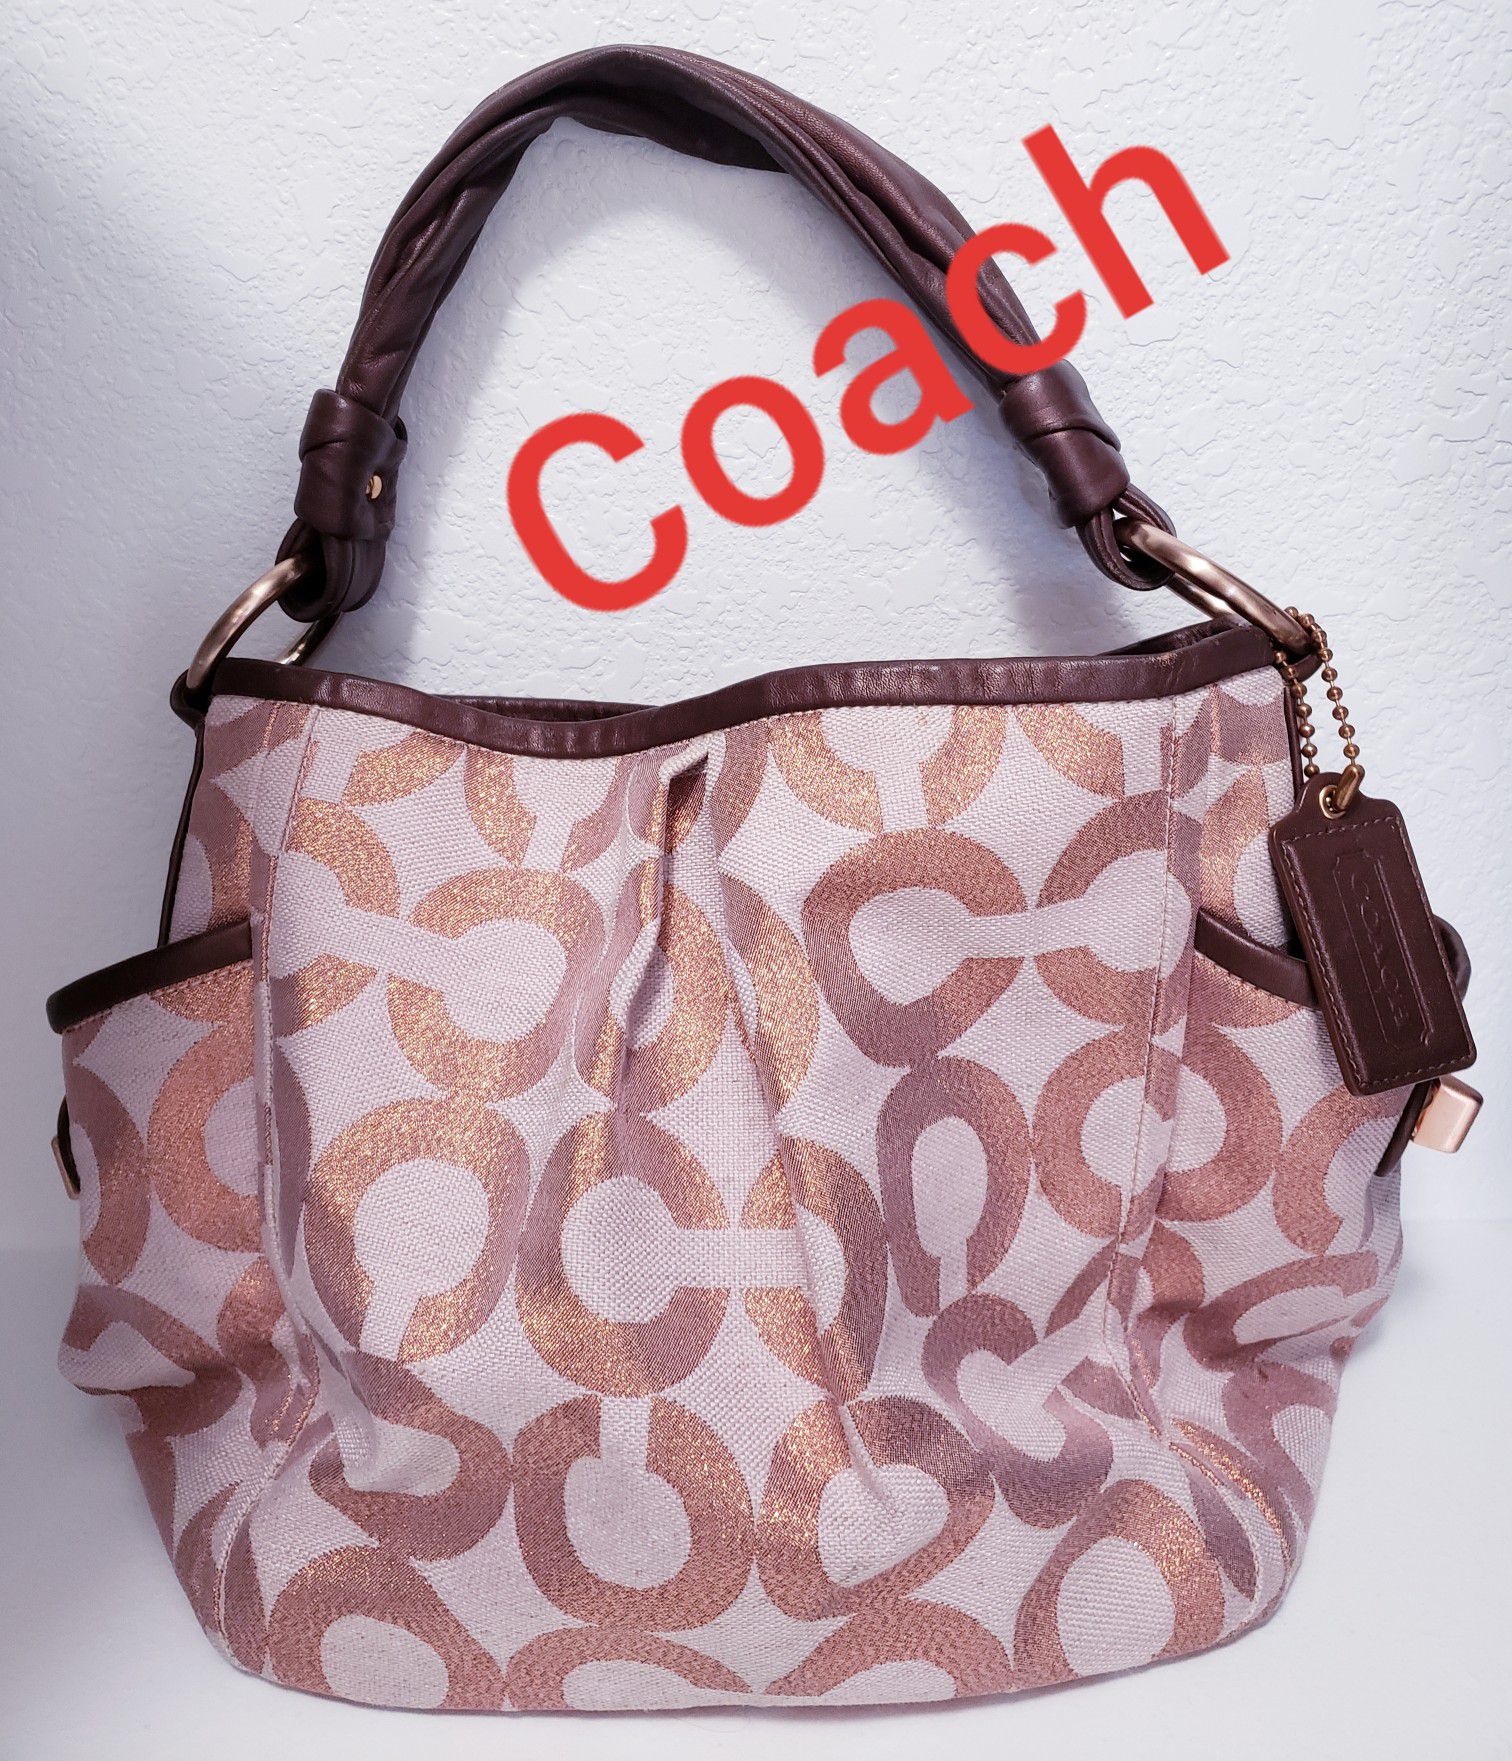 Hobo style COACH bag